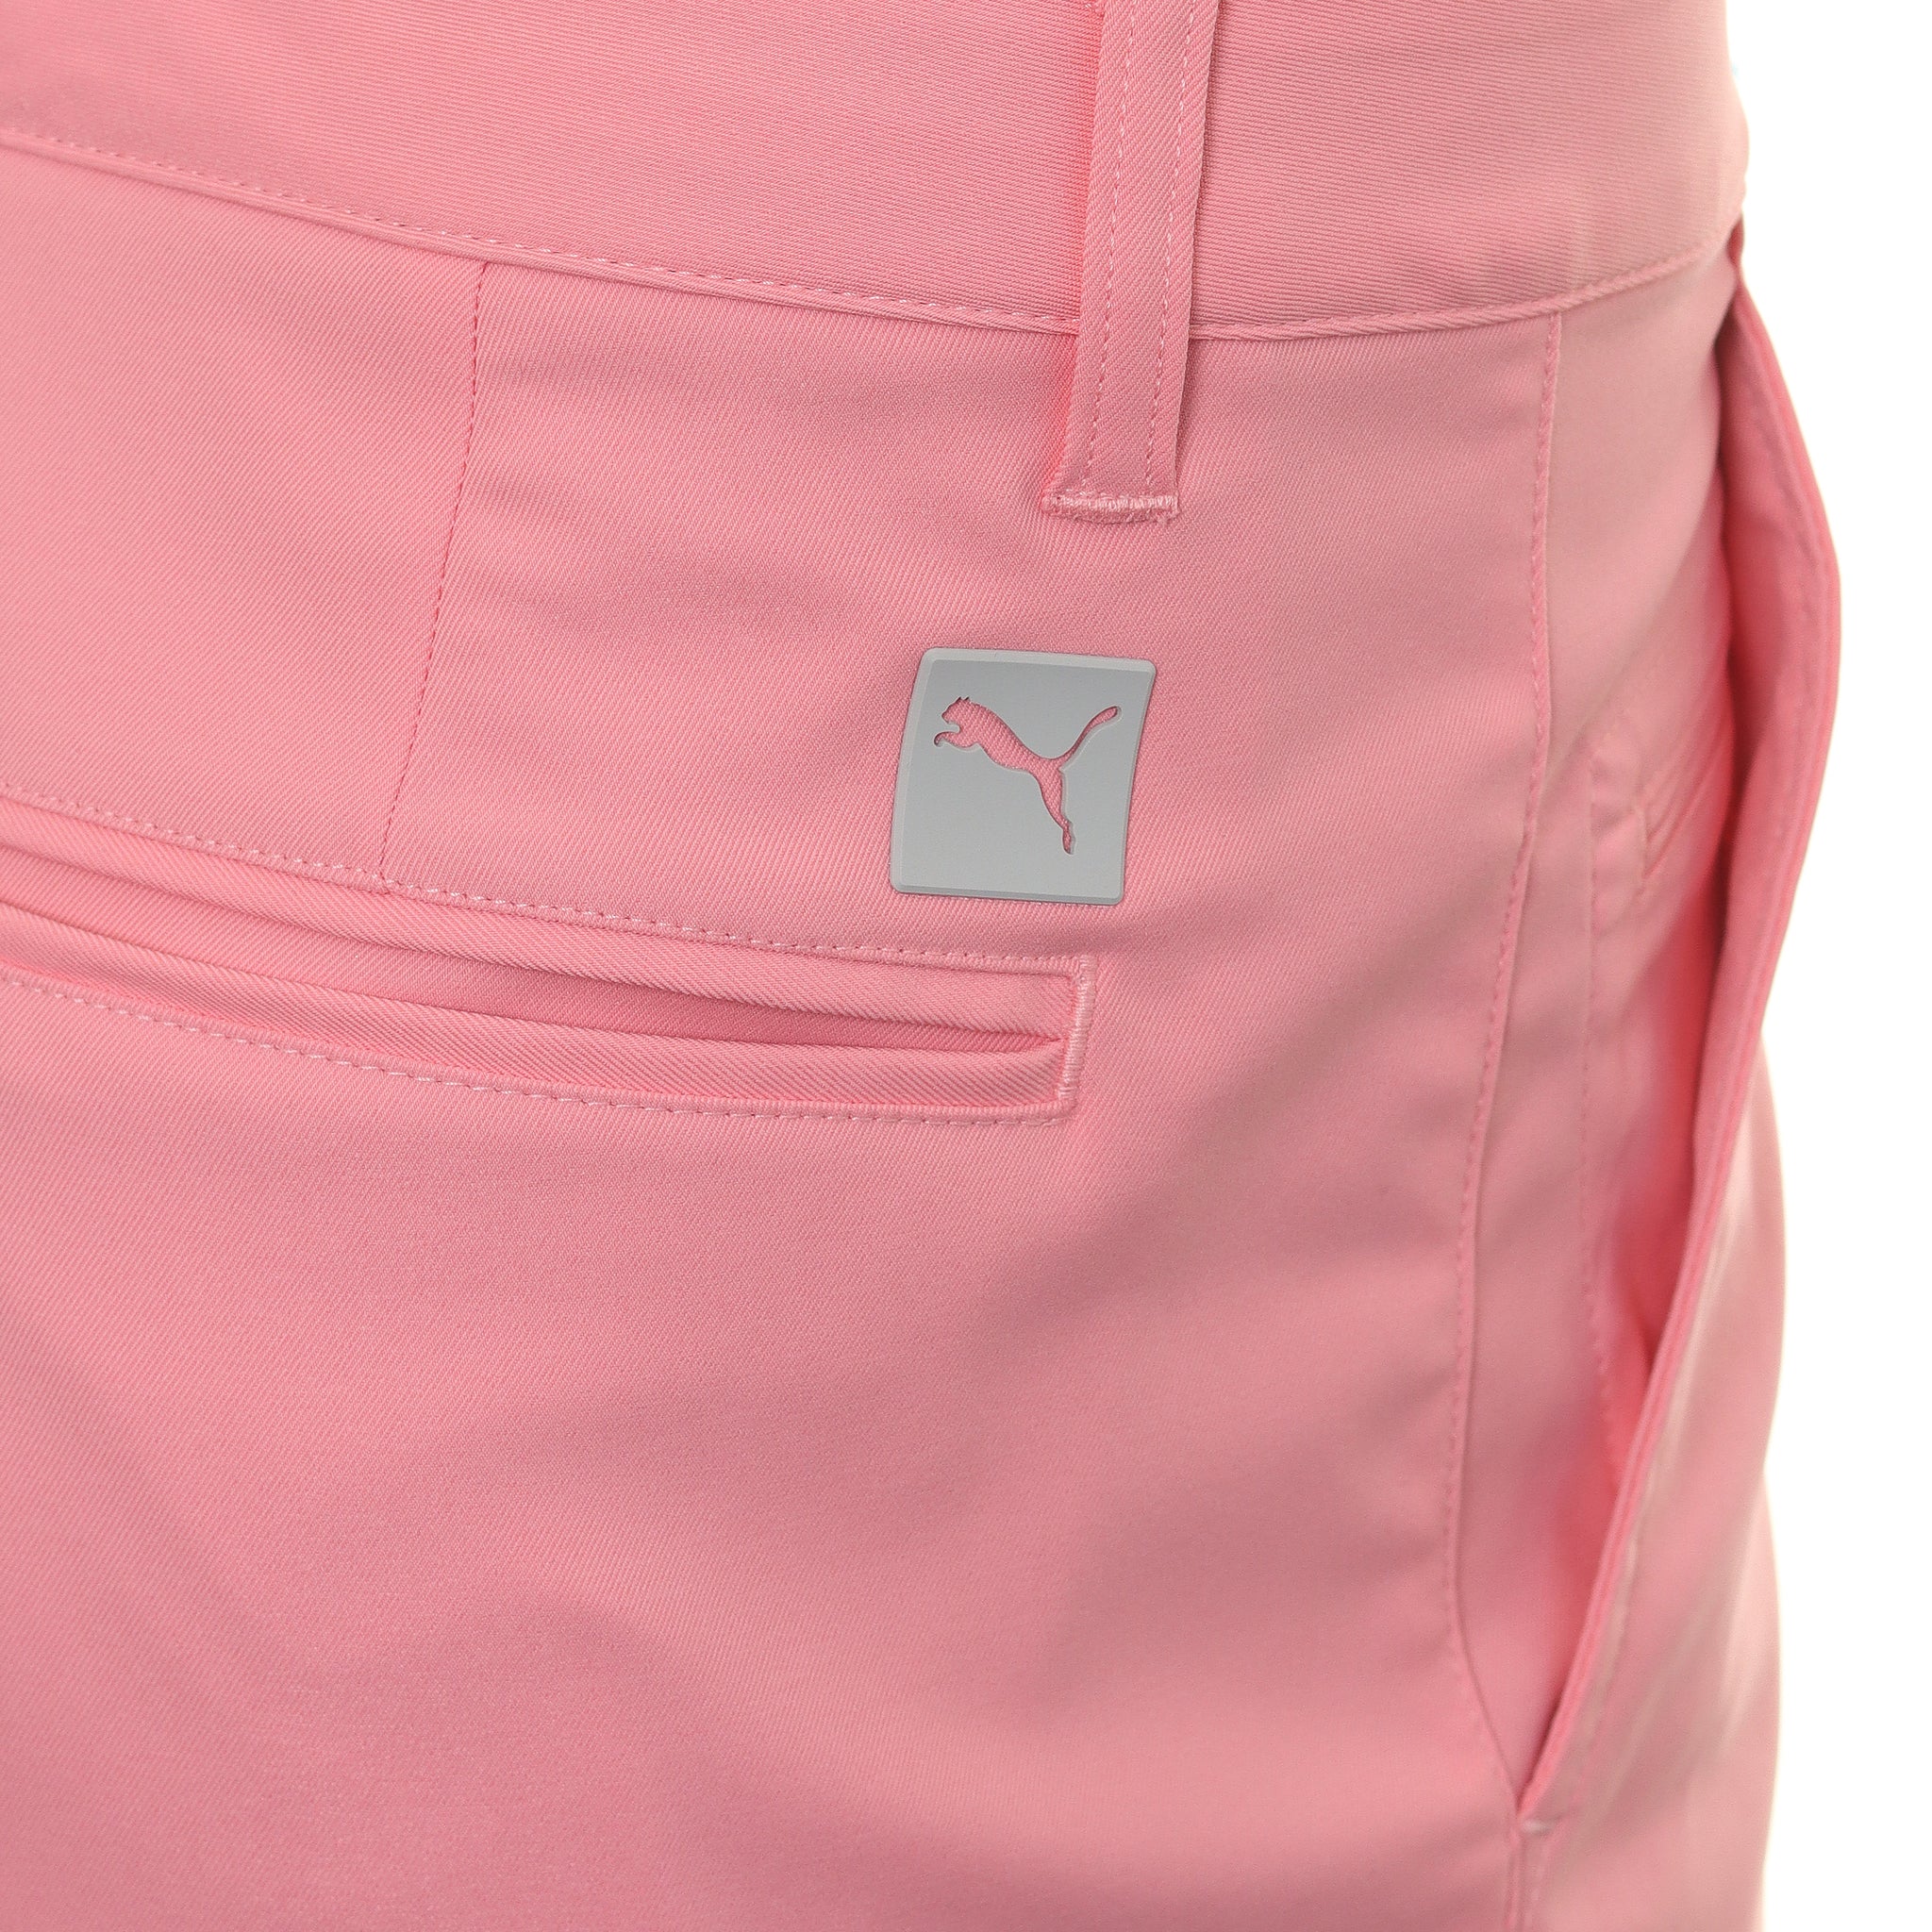 puma-golf-dealer-8-shorts-537788-ice-pink-14